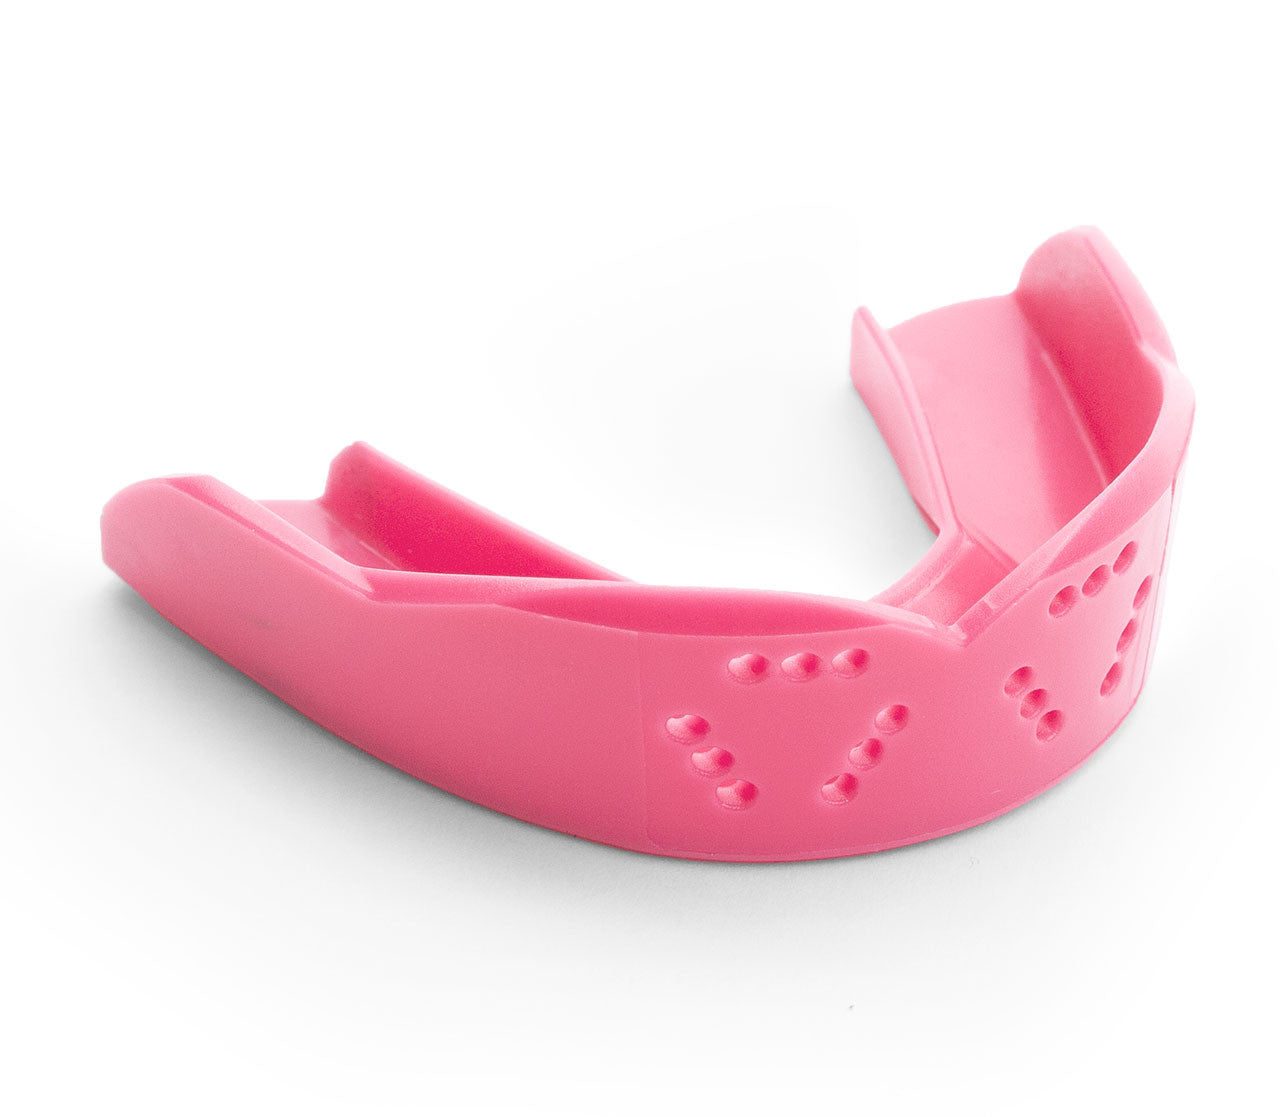 SISU 3D Mouthguard Equipment Sisu Pink Adult 